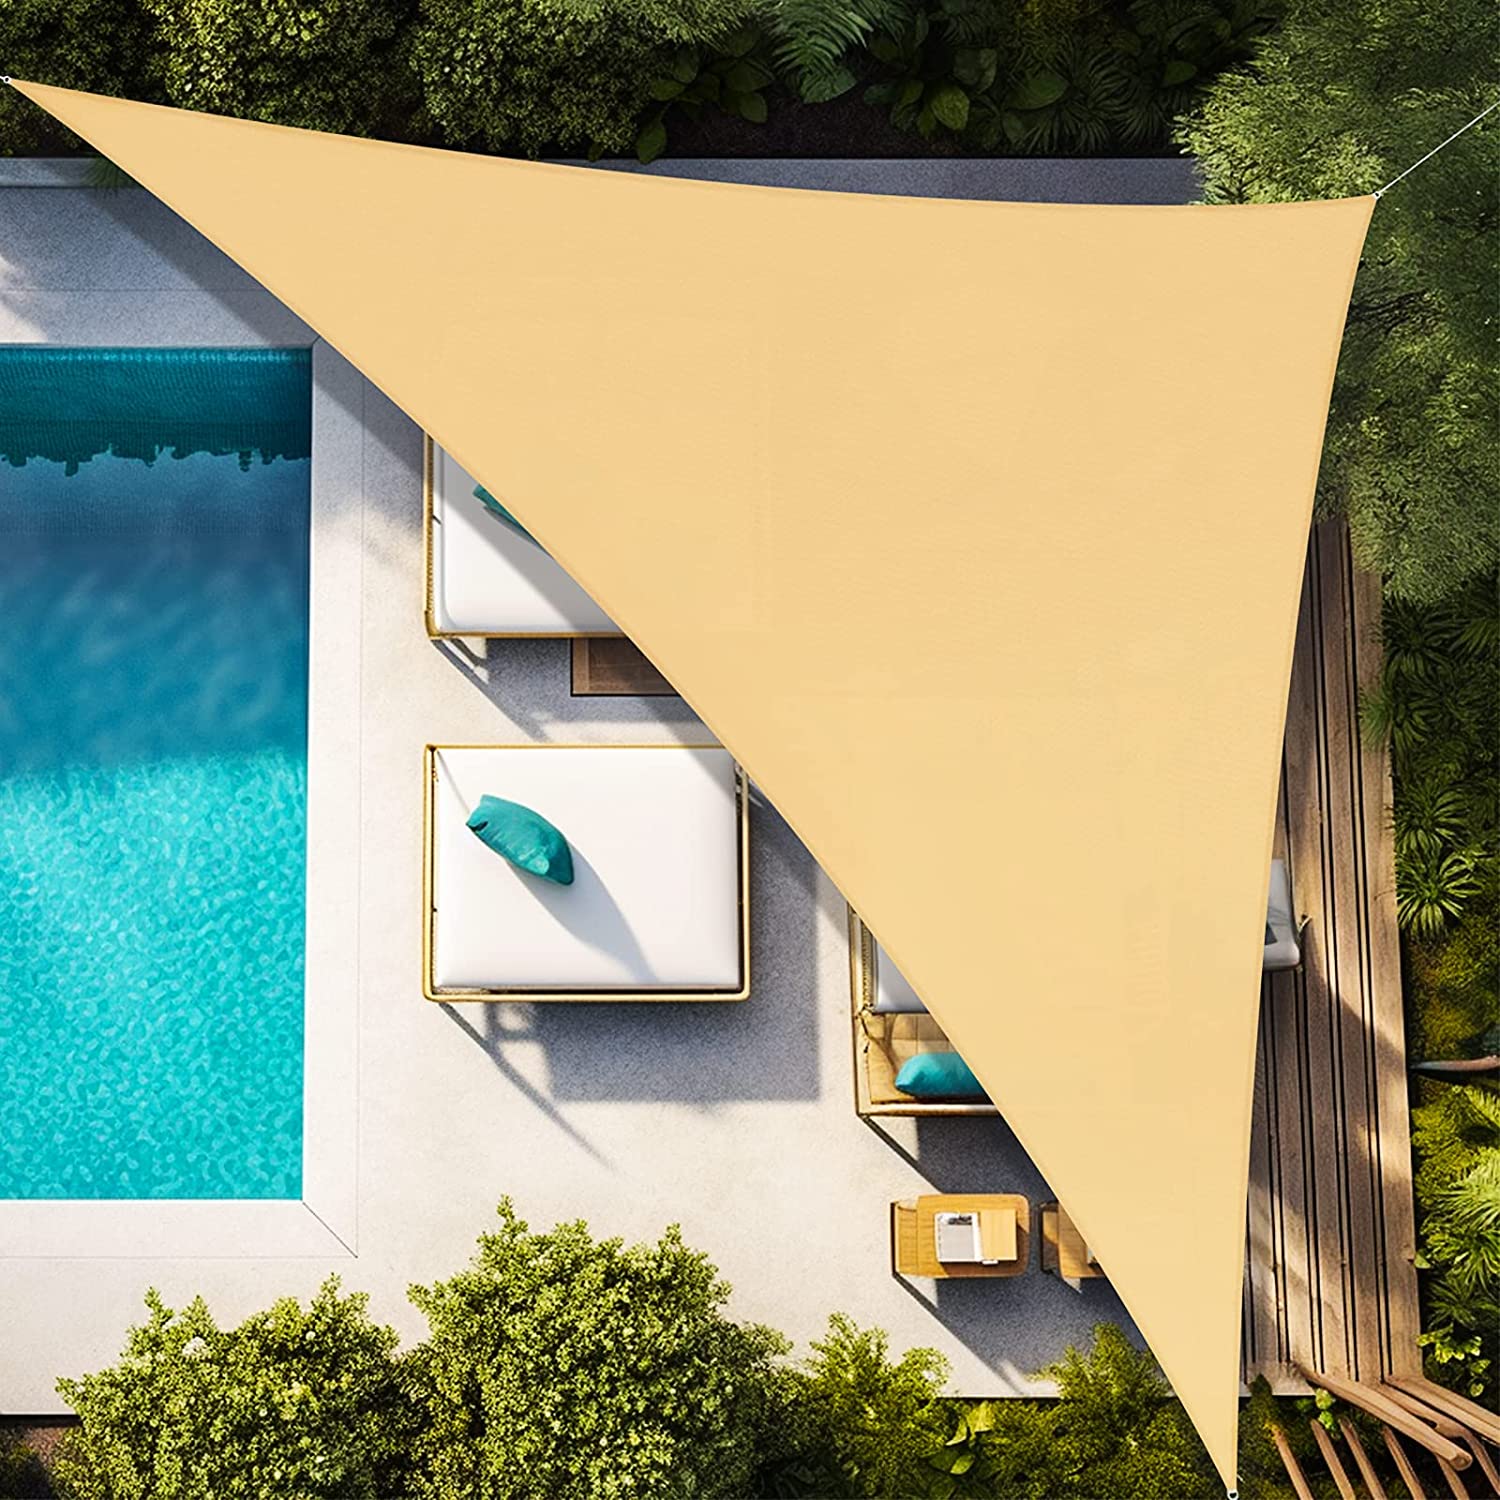 Artpuch 12' x 12' x 17' Triangle Sun Shade Sails Sand UV Block for Shelter Canopy Patio Garden Outdoor Facility Beach and Activities 